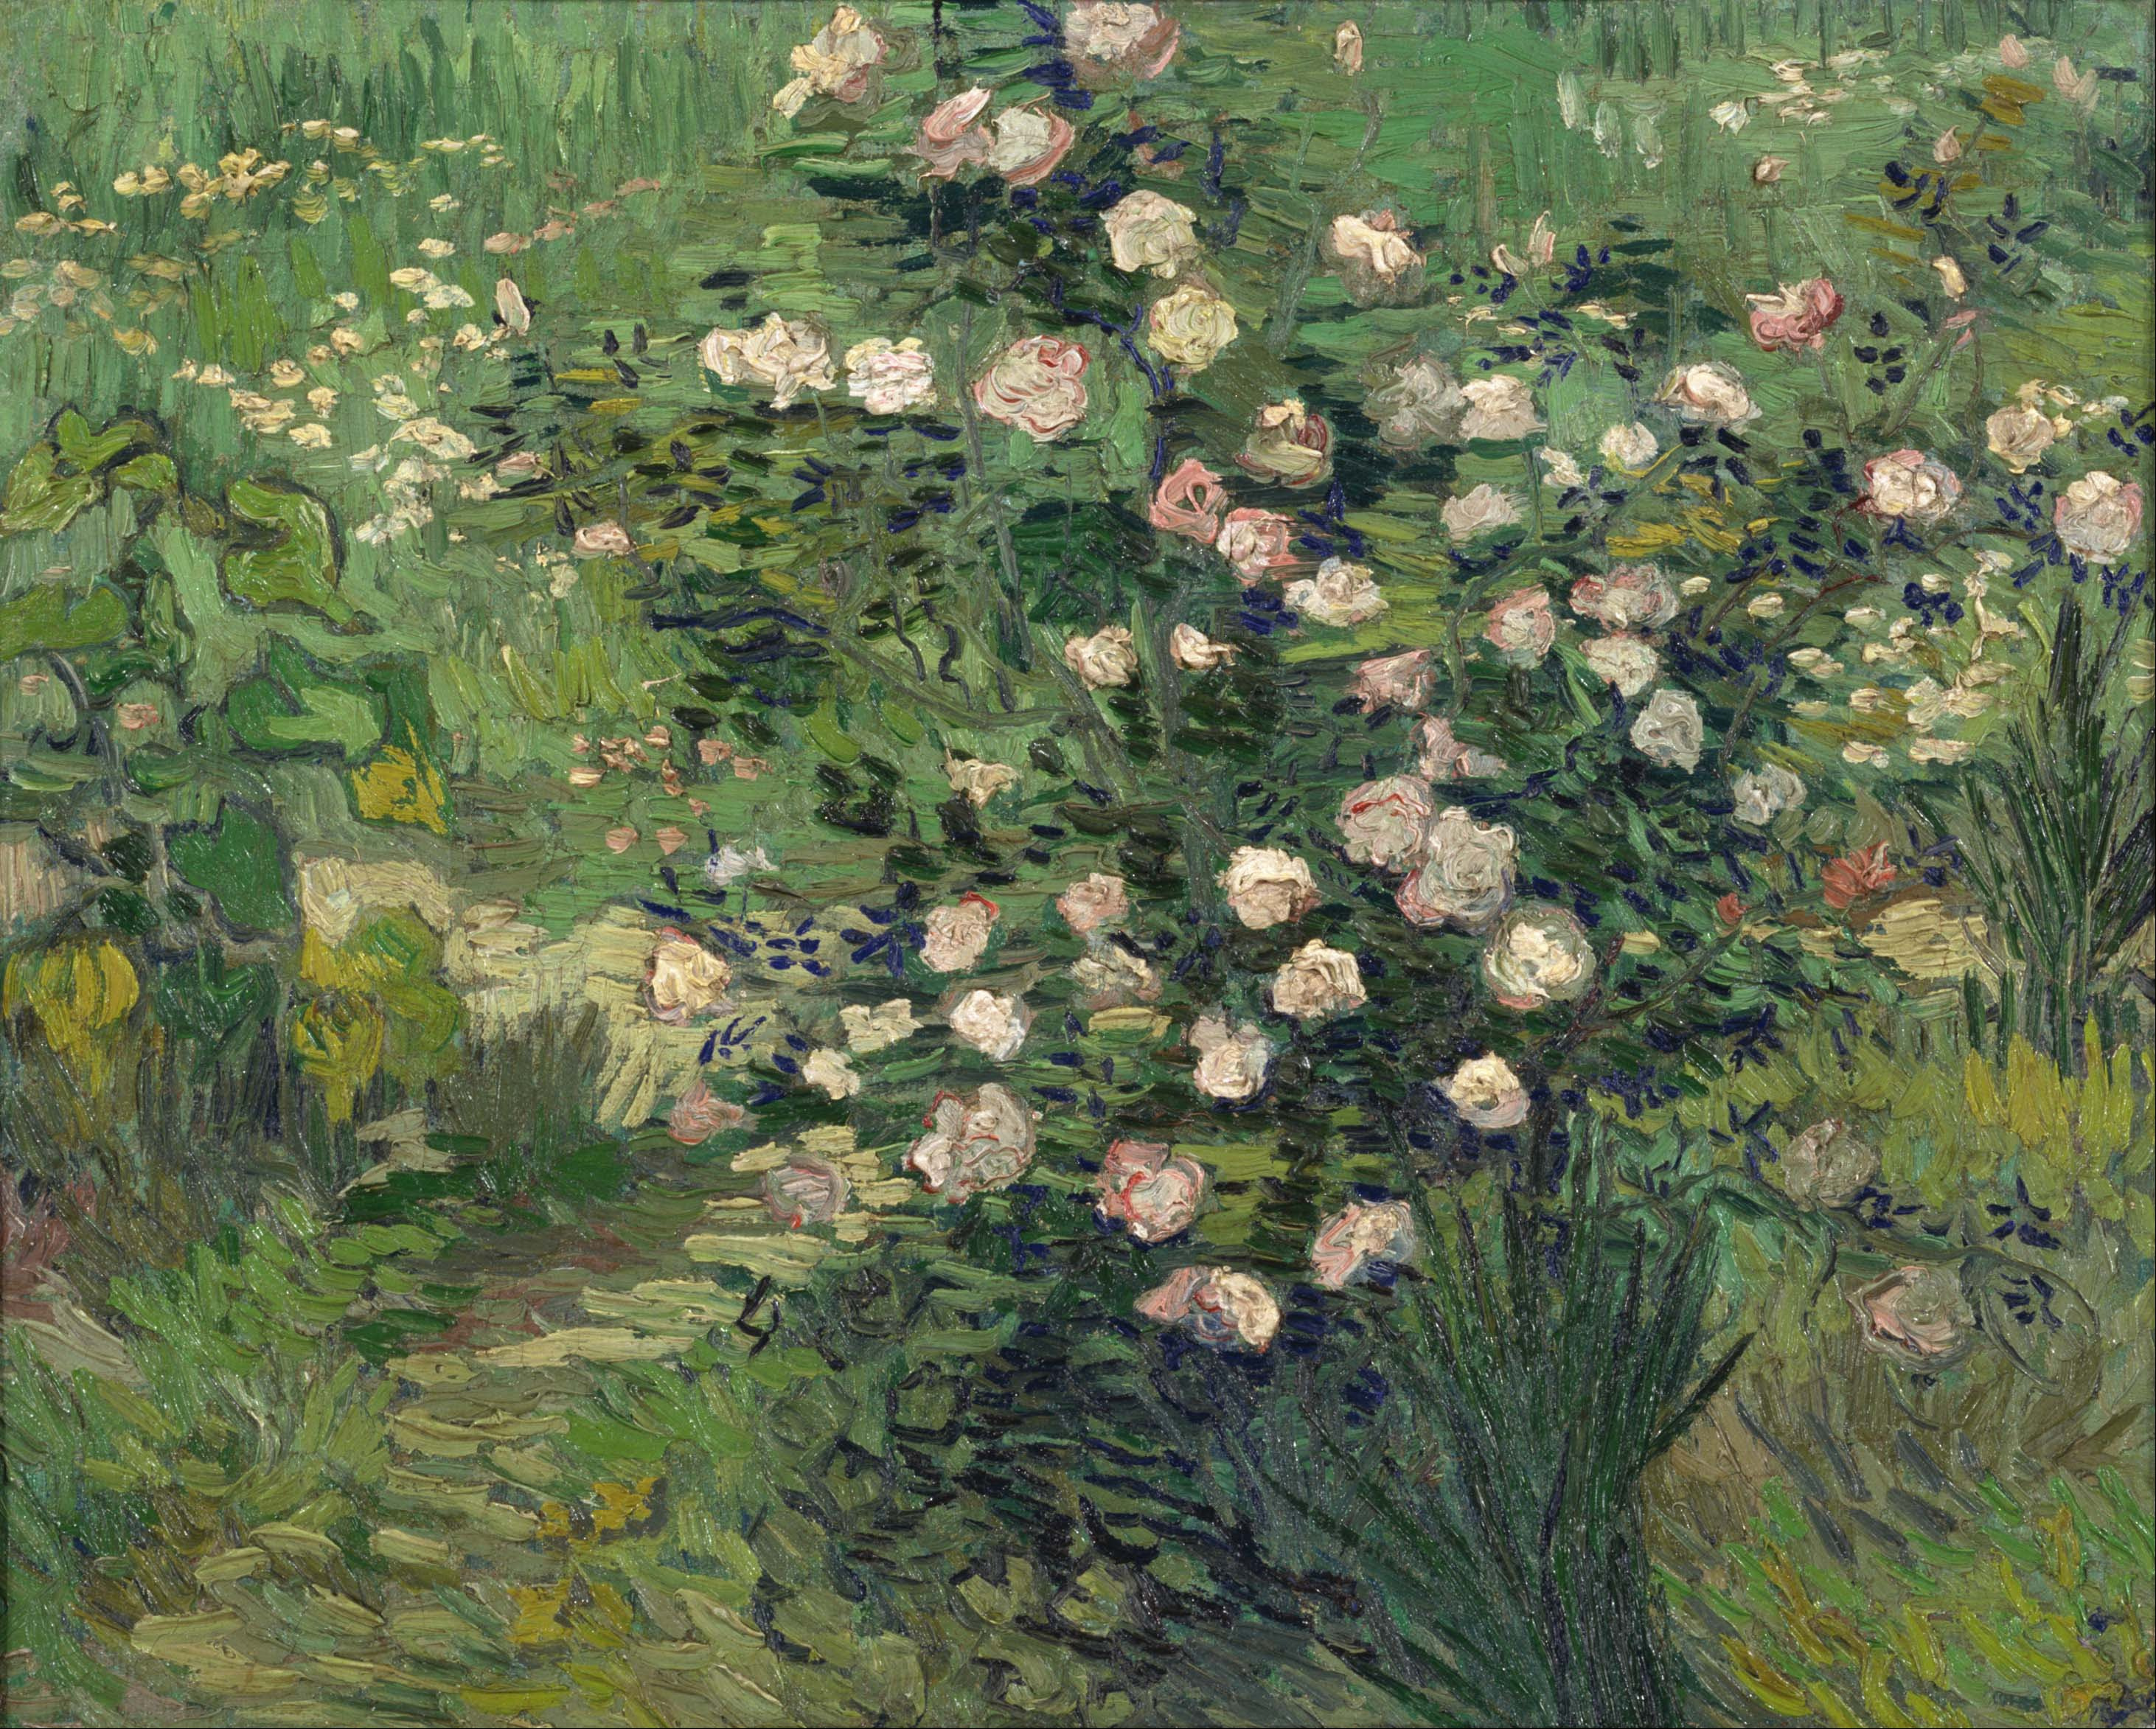 الورود  by فينسنت فان جوخ - 1889 - 41.3 x 33.0 سم  